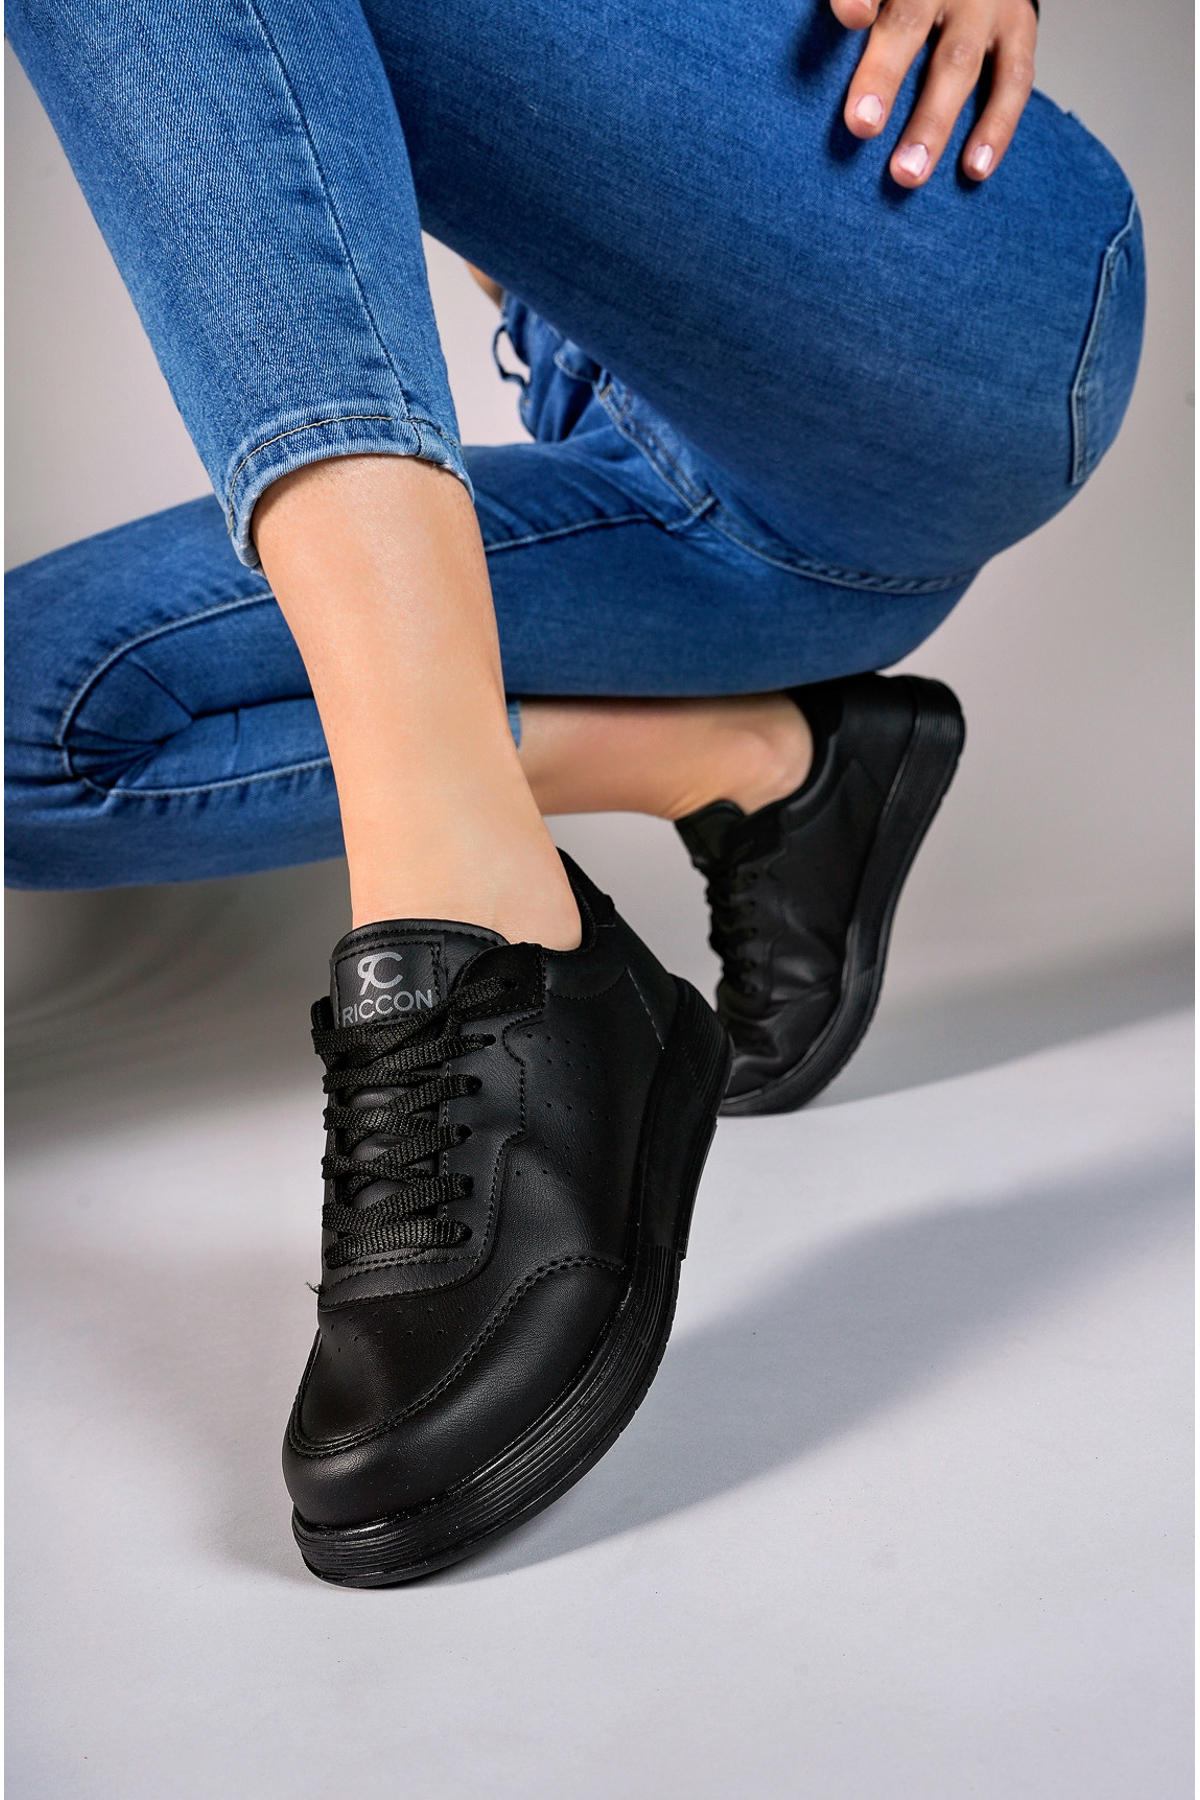 Riccon Glaweth Women's Sneaker 0012158 Black Black